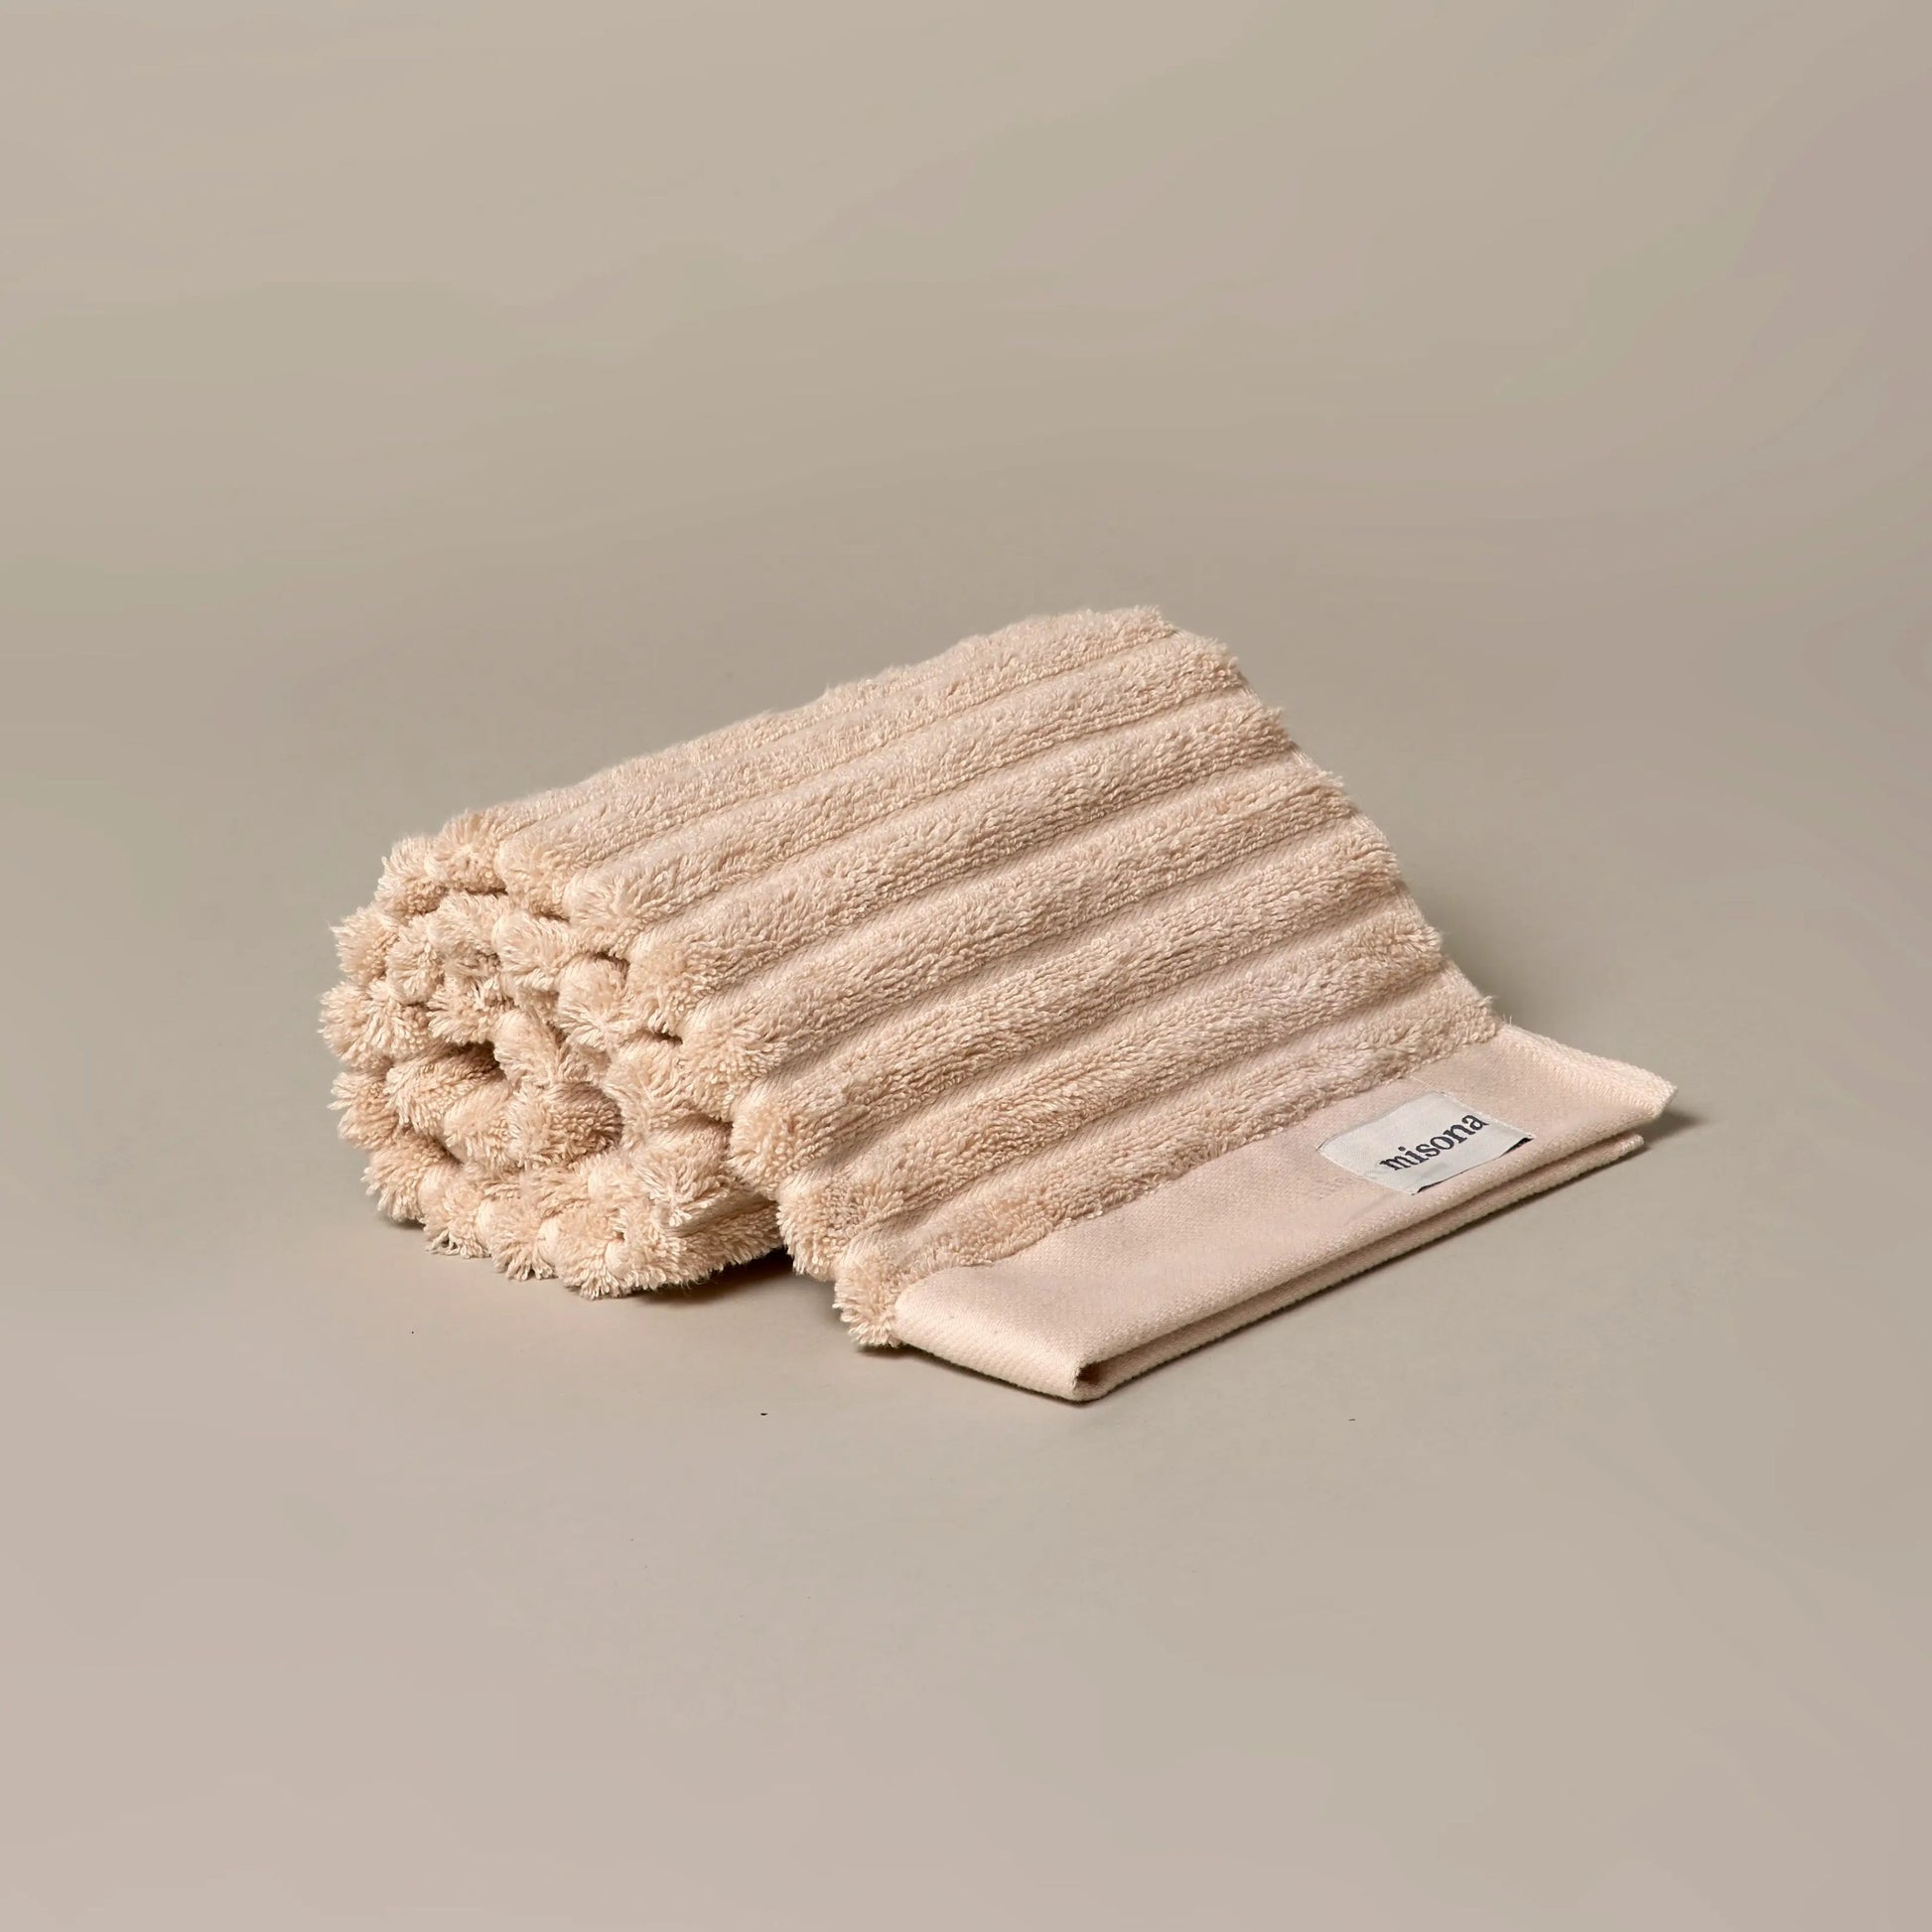 Misona Ribbed Organic Cotton Hand Towel - Natural - Hand Towels - Misona - Bliss Bathroom Supplies -